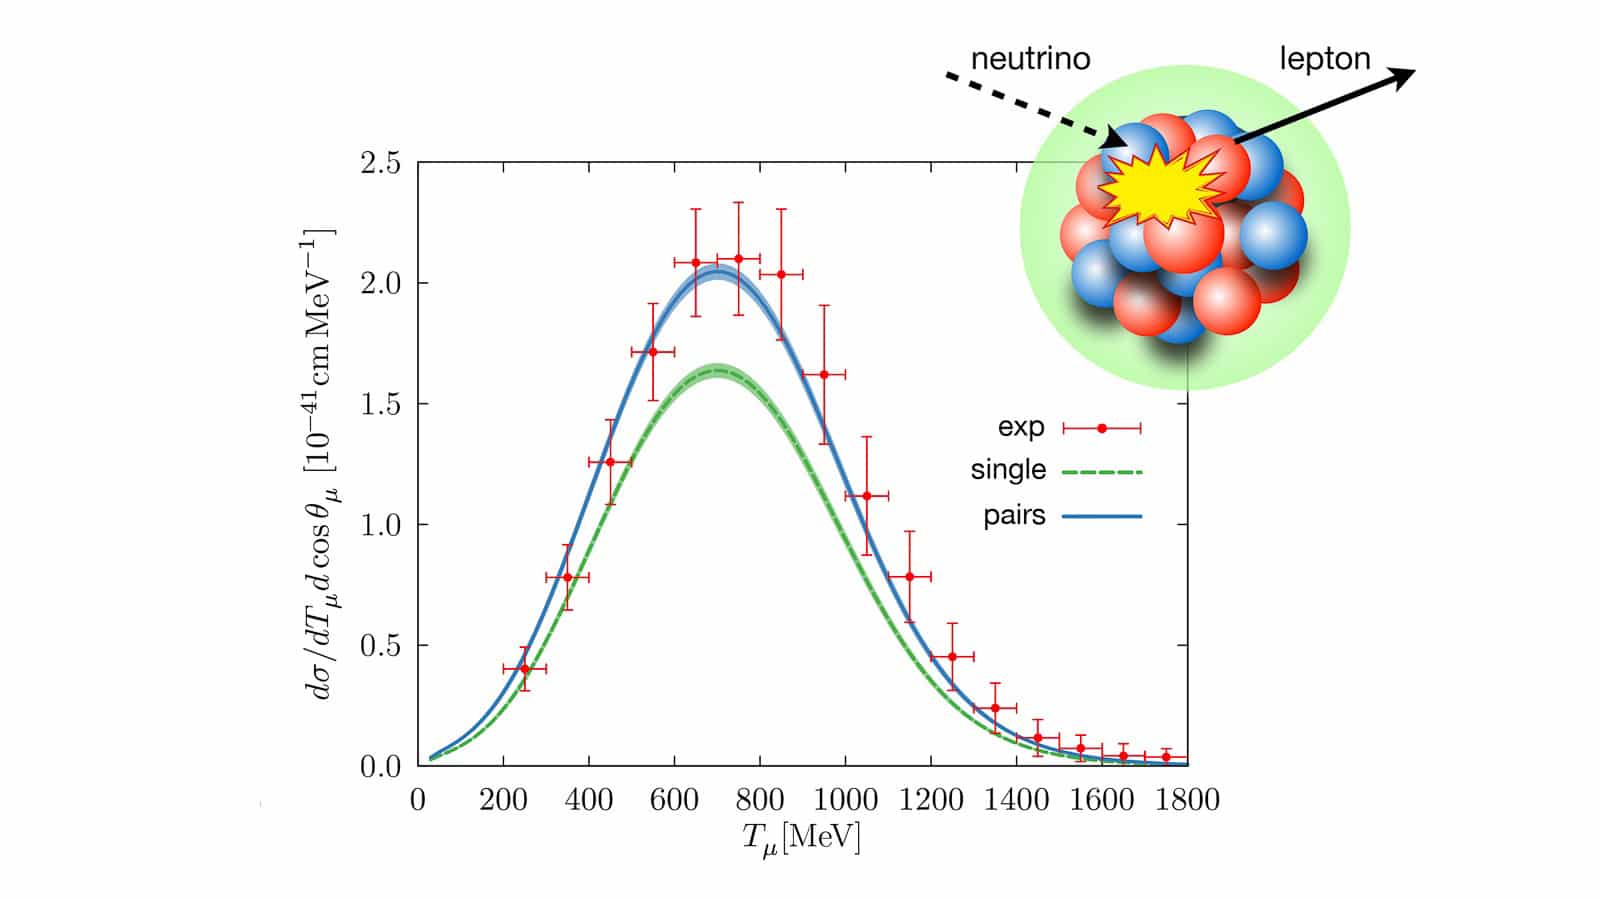 Cross sections of neutrino-nucleus interactions versus energy